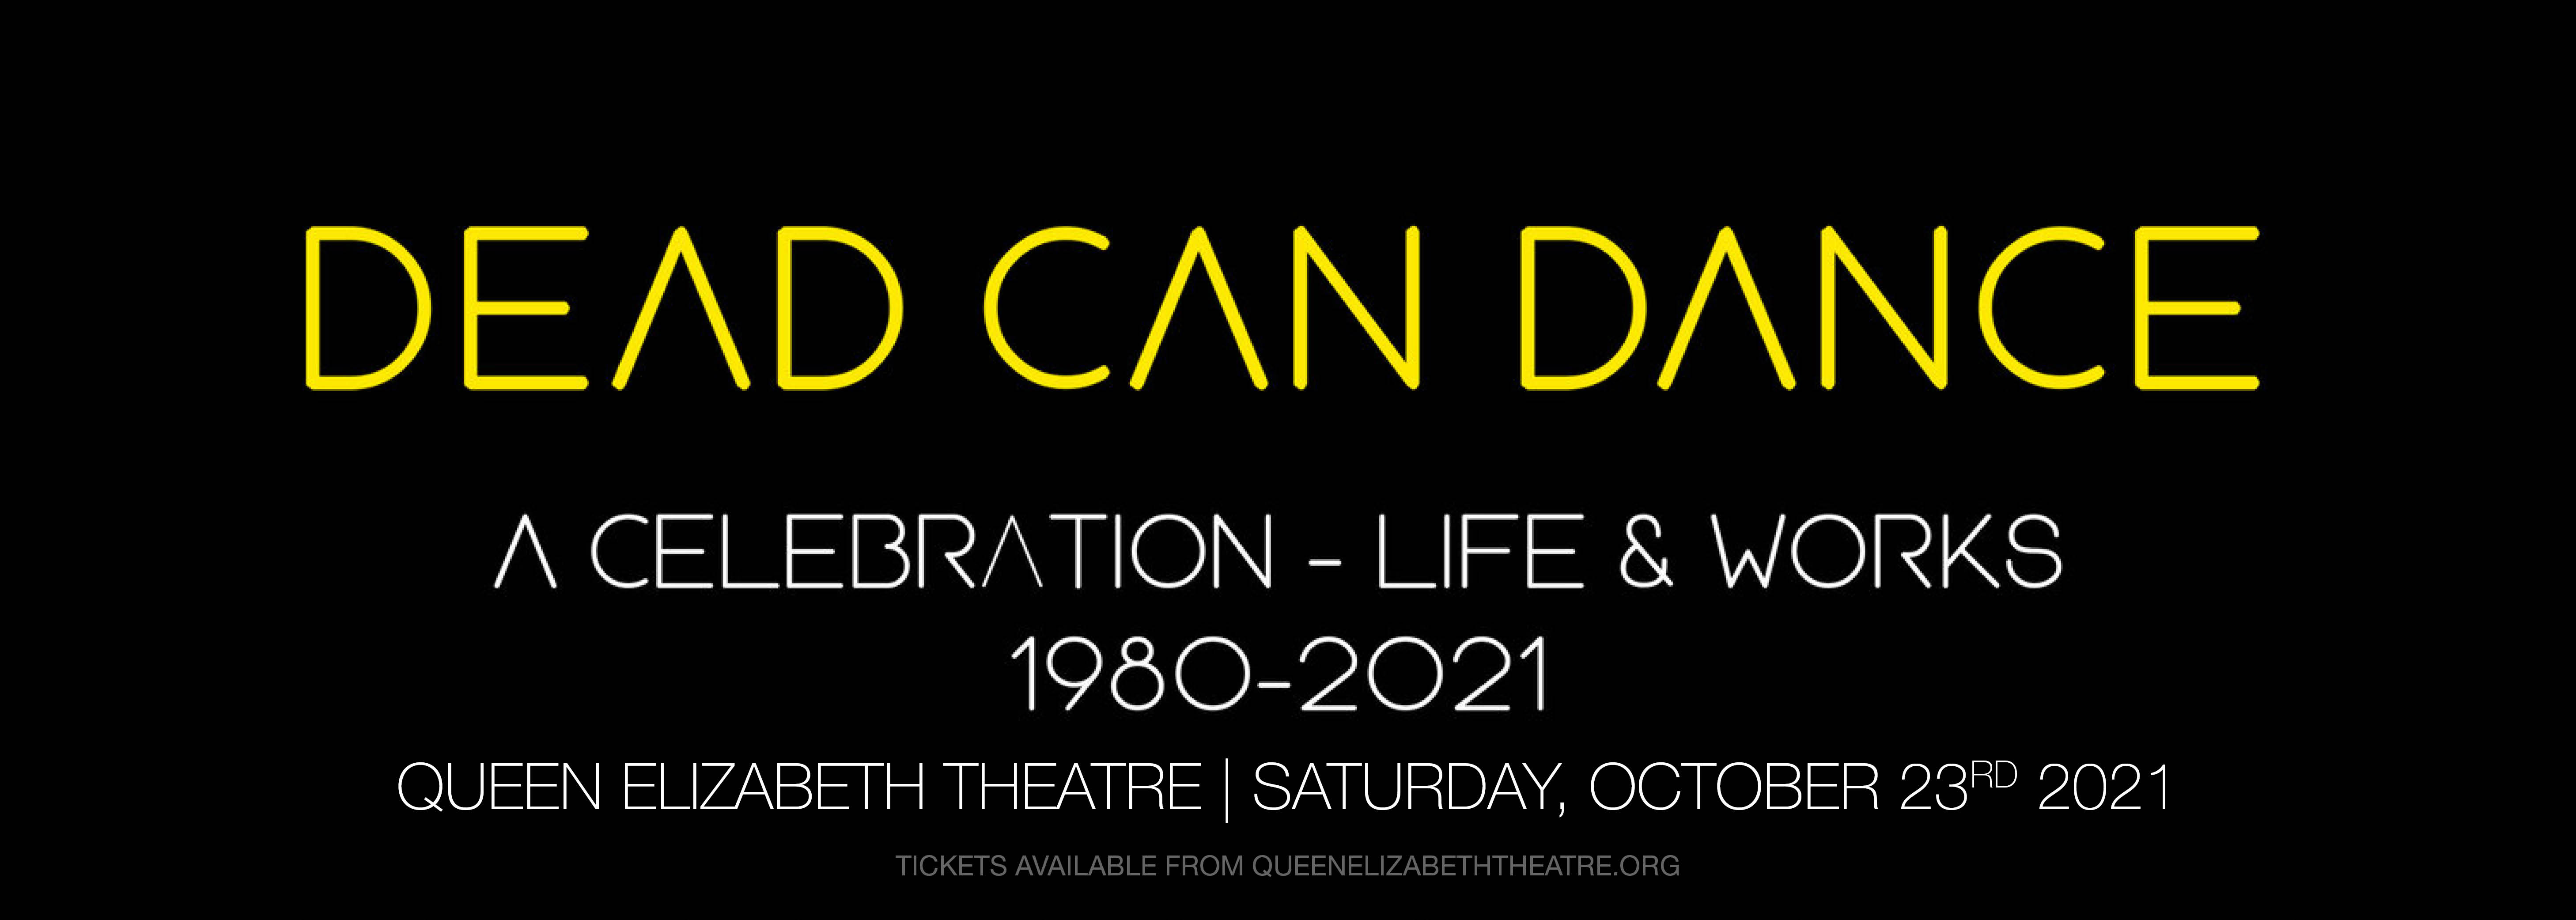 Dead Can Dance & Agnes Obel [CANCELLED] at Queen Elizabeth Theatre